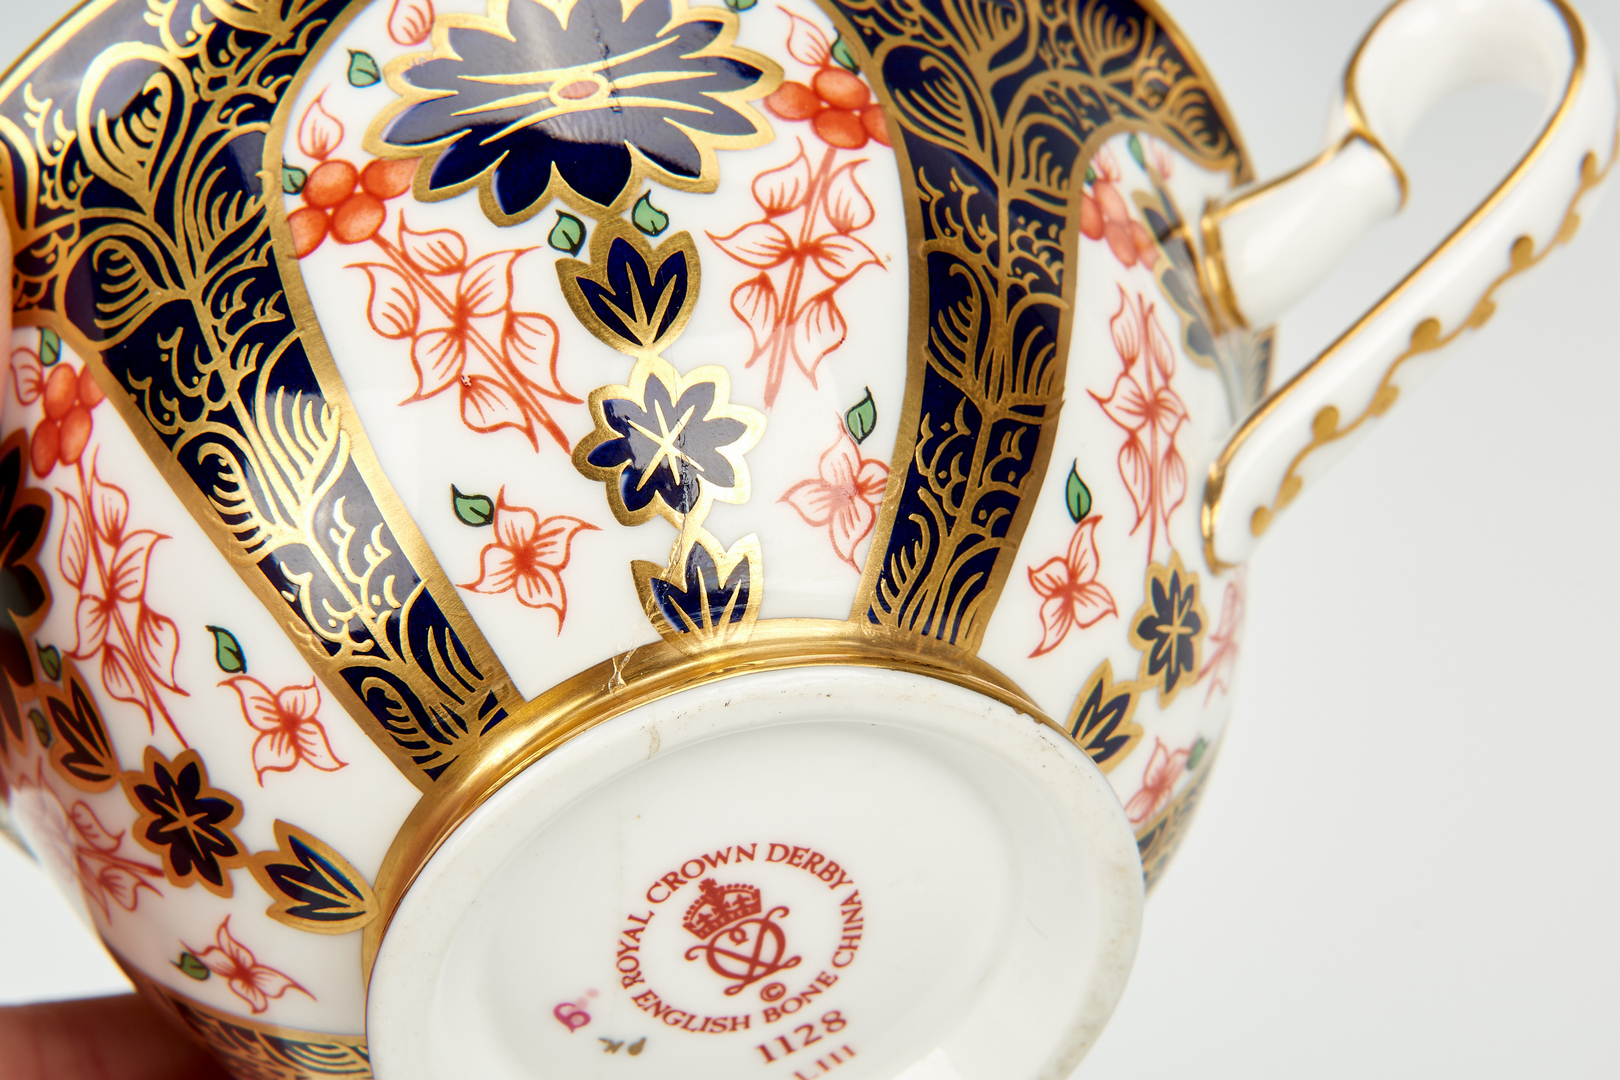 Lot 250: 63 Pcs. Royal Crown Derby Imari Porcelain, Cigar Pattern